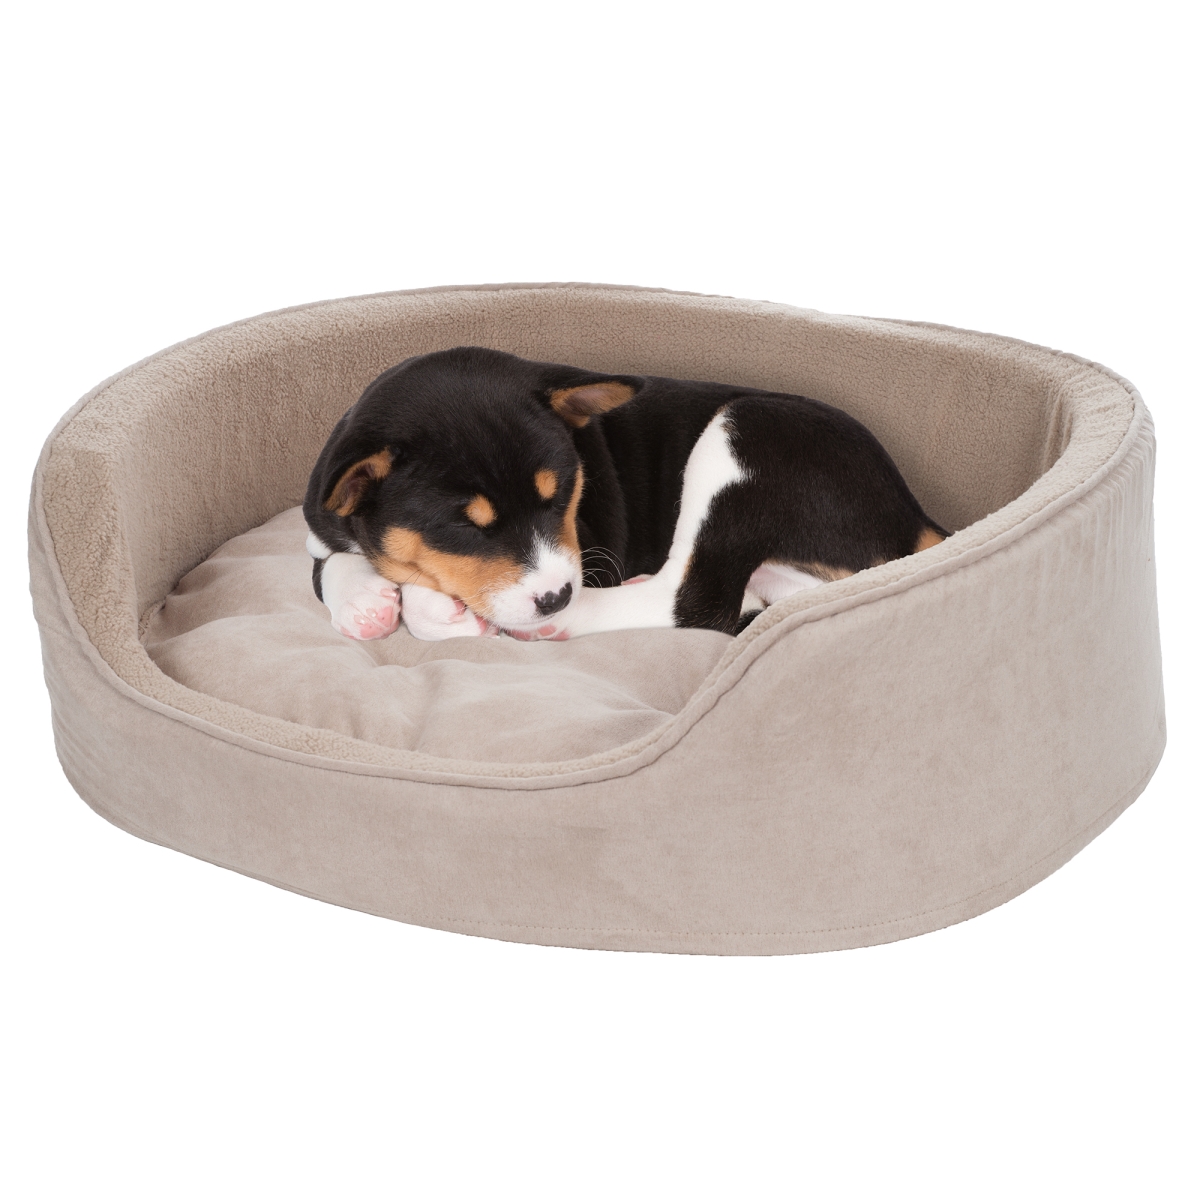 Petmaker 80-pet5002 Medium Cuddle Round Microsuede Pet Bed - Clay